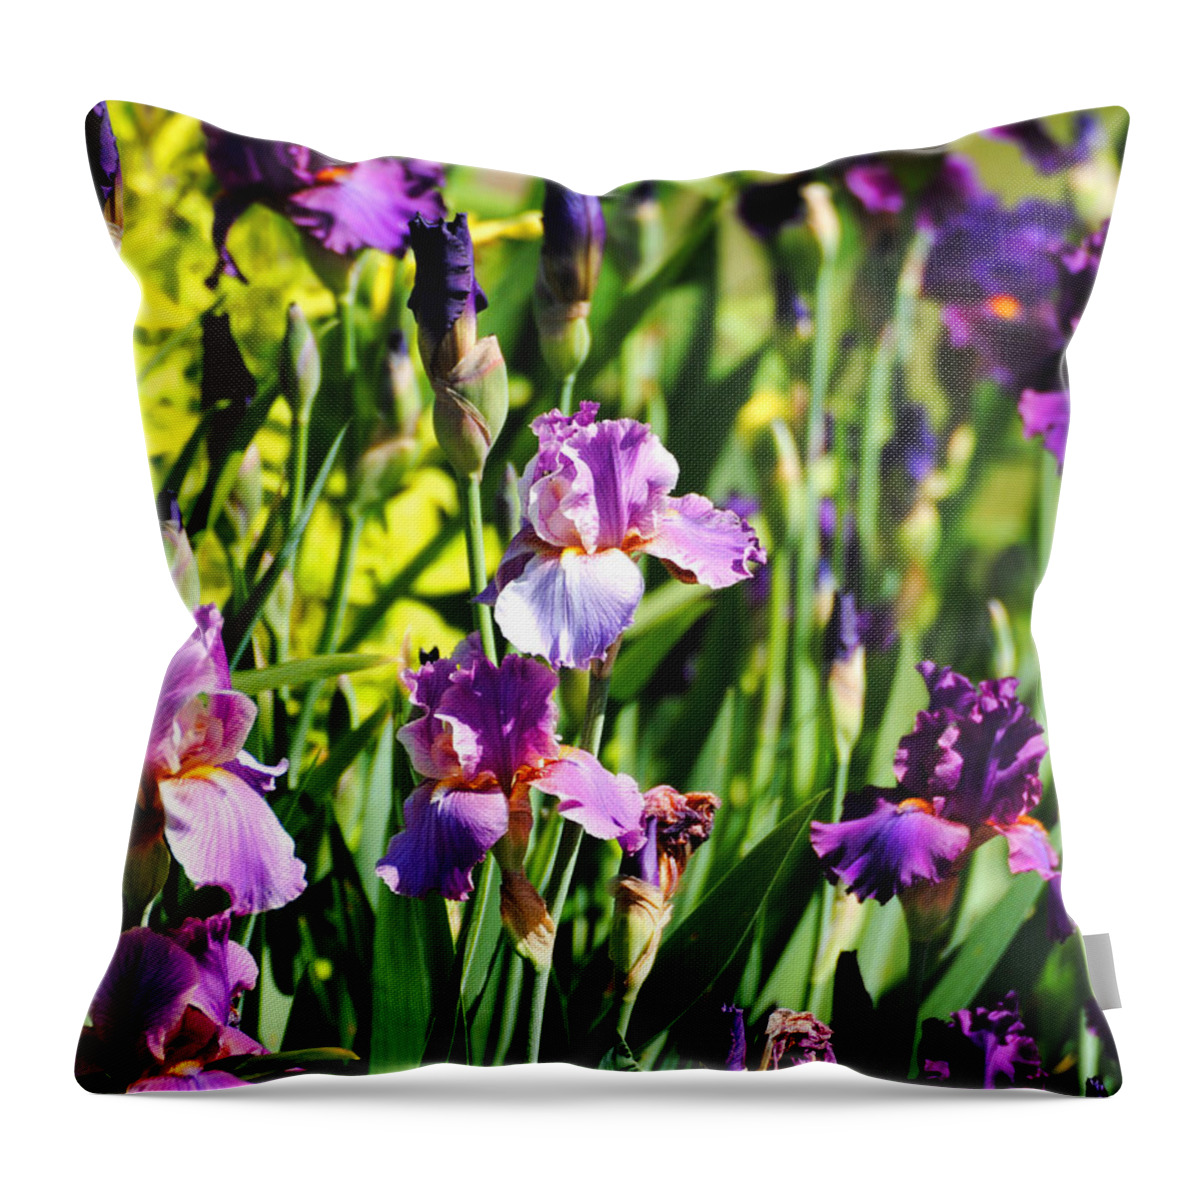 Beautiful Iris Throw Pillow featuring the photograph Garden of Irises by Jai Johnson